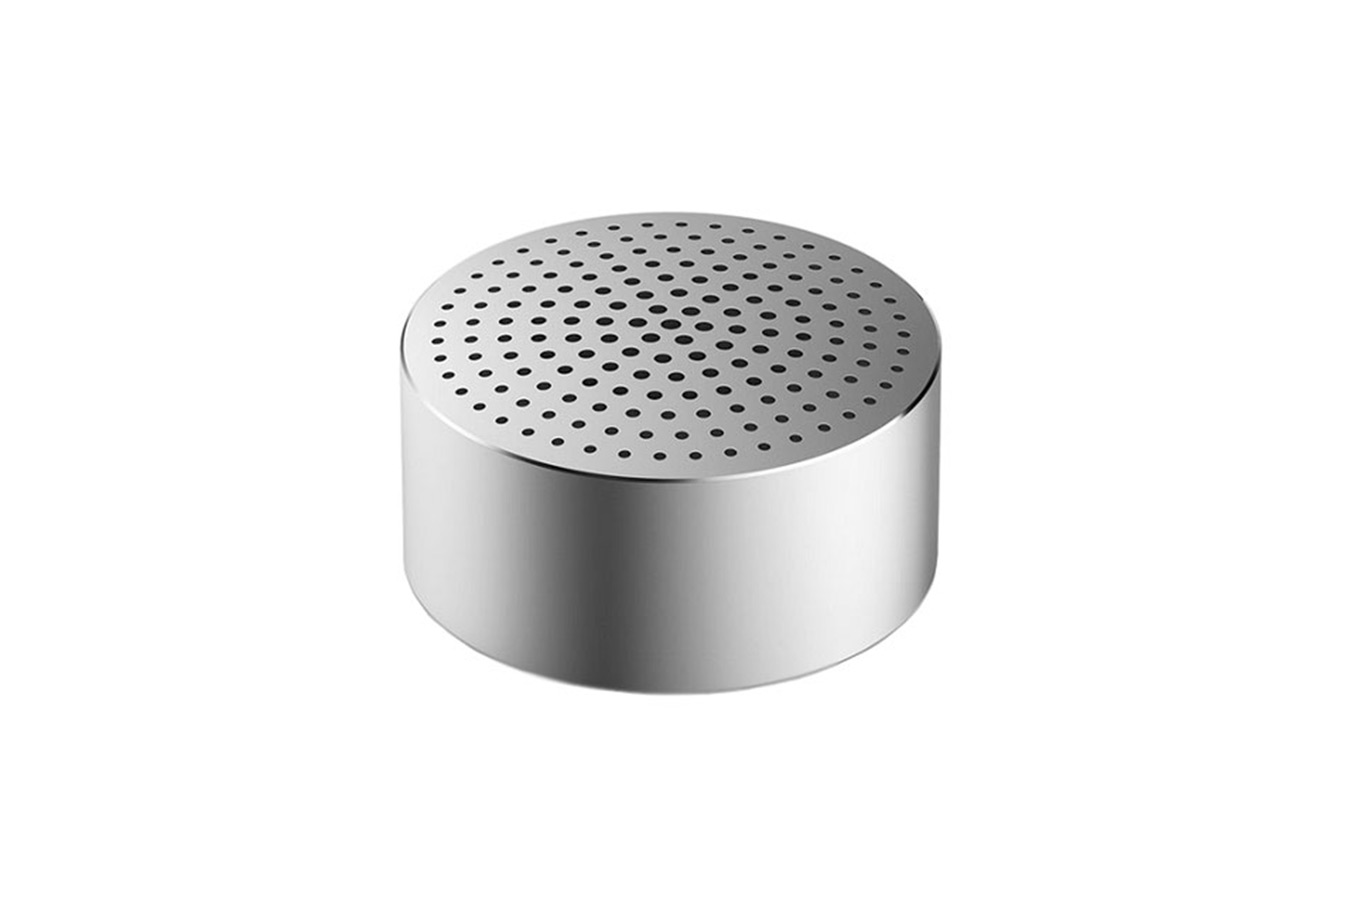   AppleAvenue Портативная колонка Xiaomi Mi Portable Bluetooth (Silver)